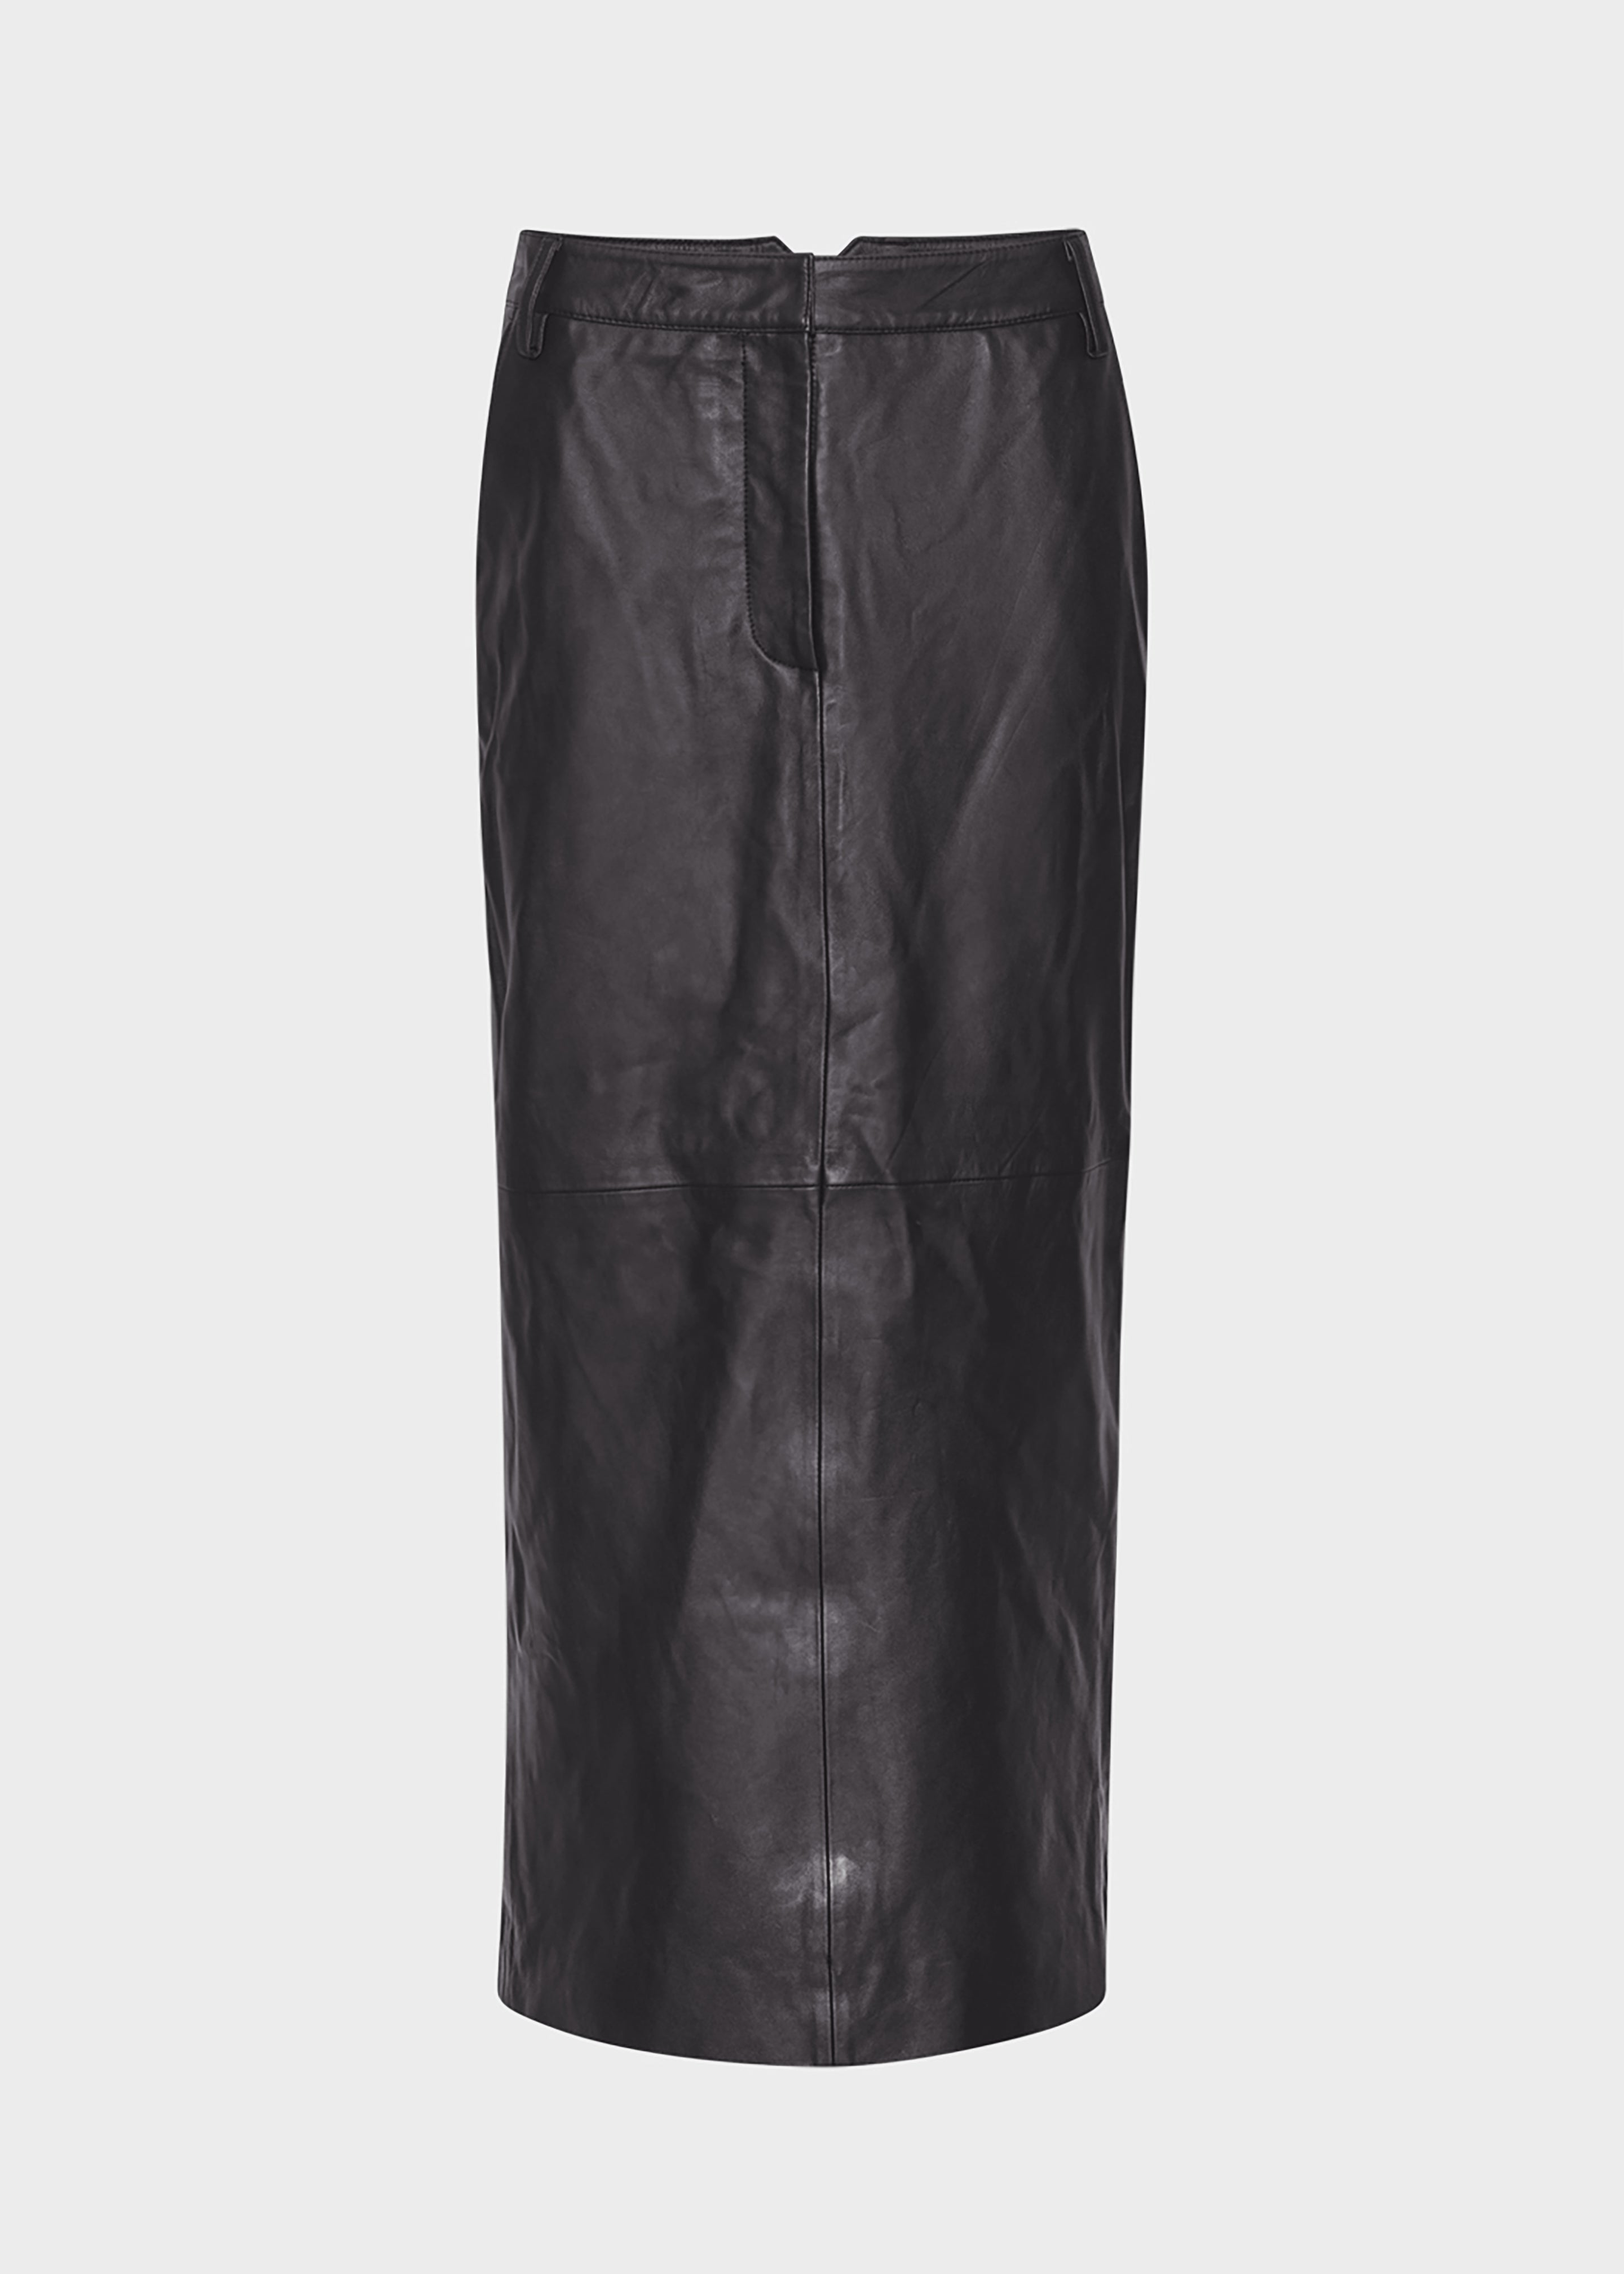 Remain Maxi Pencil Skirt - Black - 7